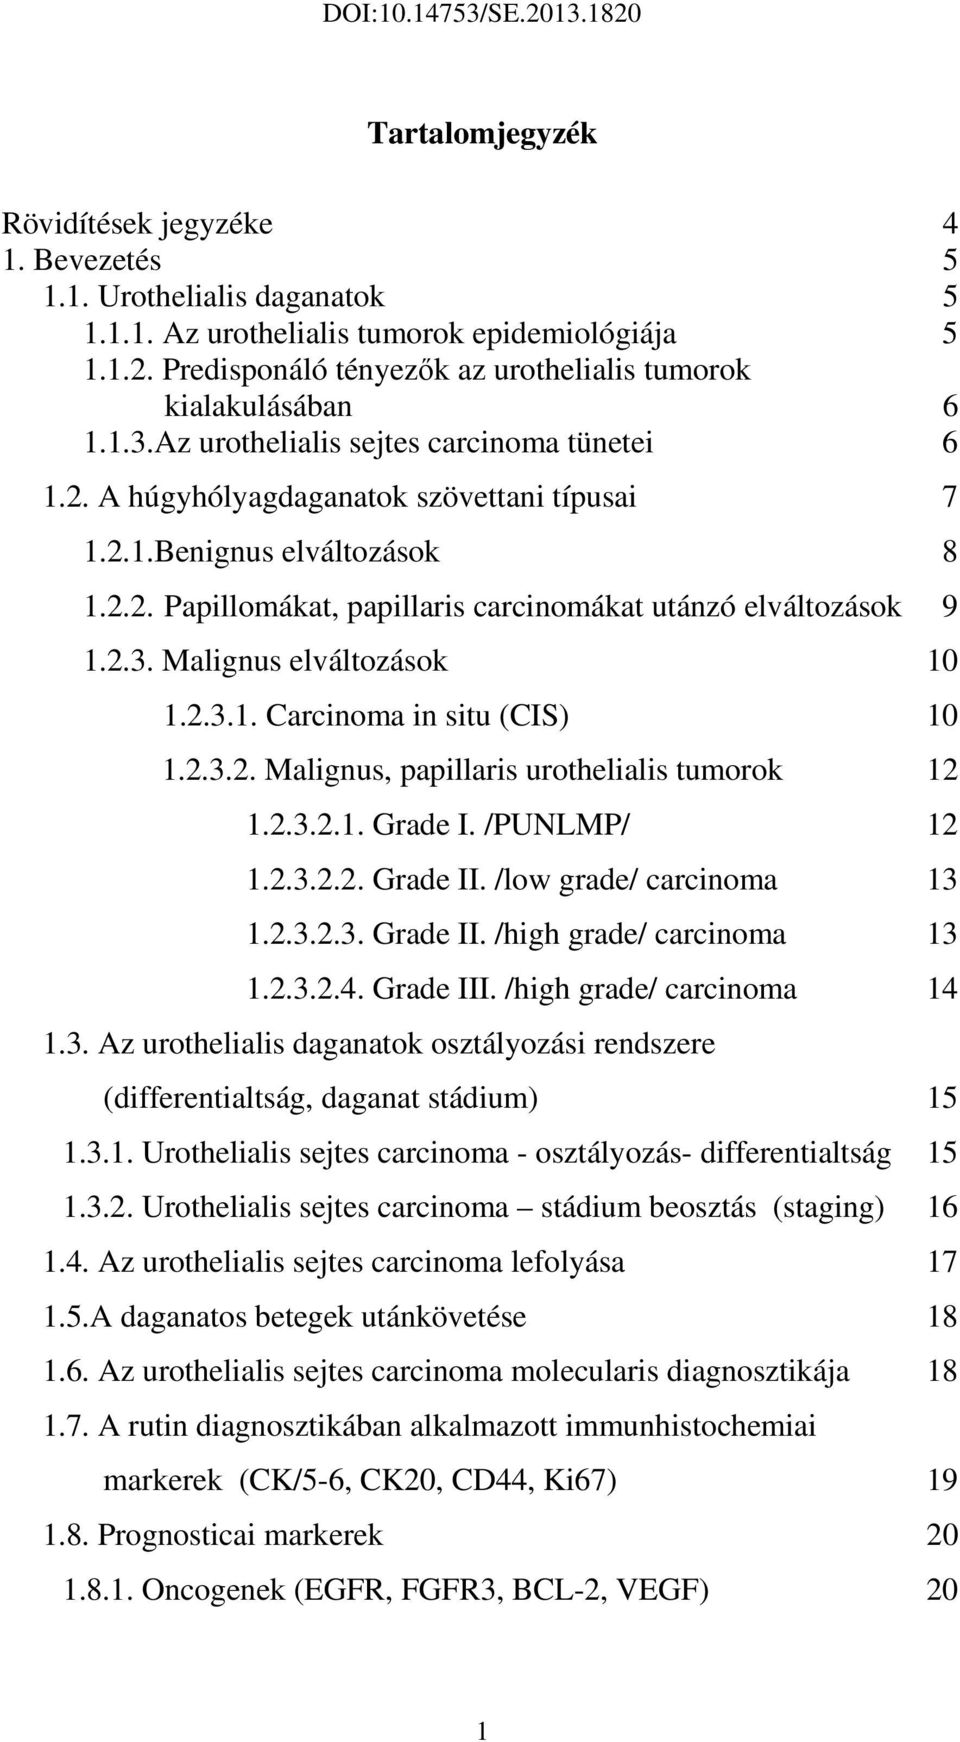 2.3. Malignus elváltozások 10 1.2.3.1. Carcinoma in situ (CIS) 10 1.2.3.2. Malignus, papillaris urothelialis tumorok 12 1.2.3.2.1. Grade I. /PUNLMP/ 12 1.2.3.2.2. Grade II. /low grade/ carcinoma 13 1.